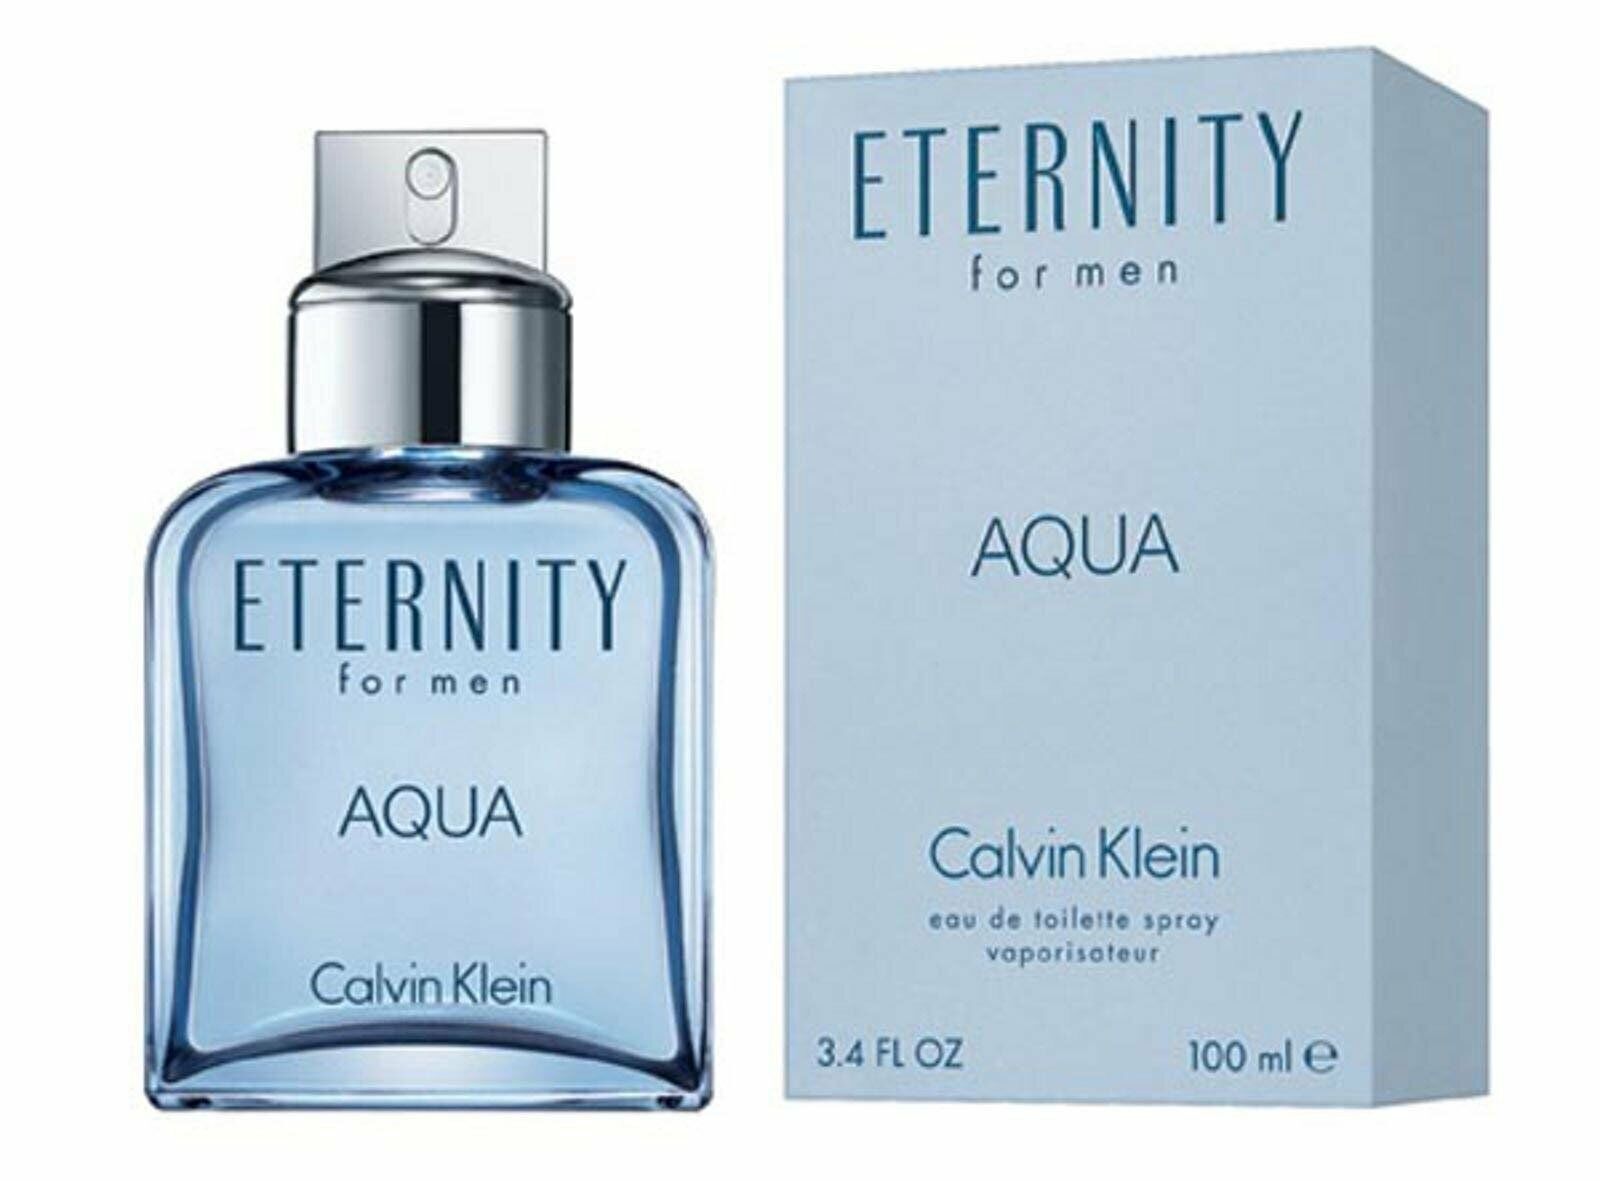 Calvin Klein Eternity For Men Aqua 100ml RRP £57 CLEARANCE XL £29.99